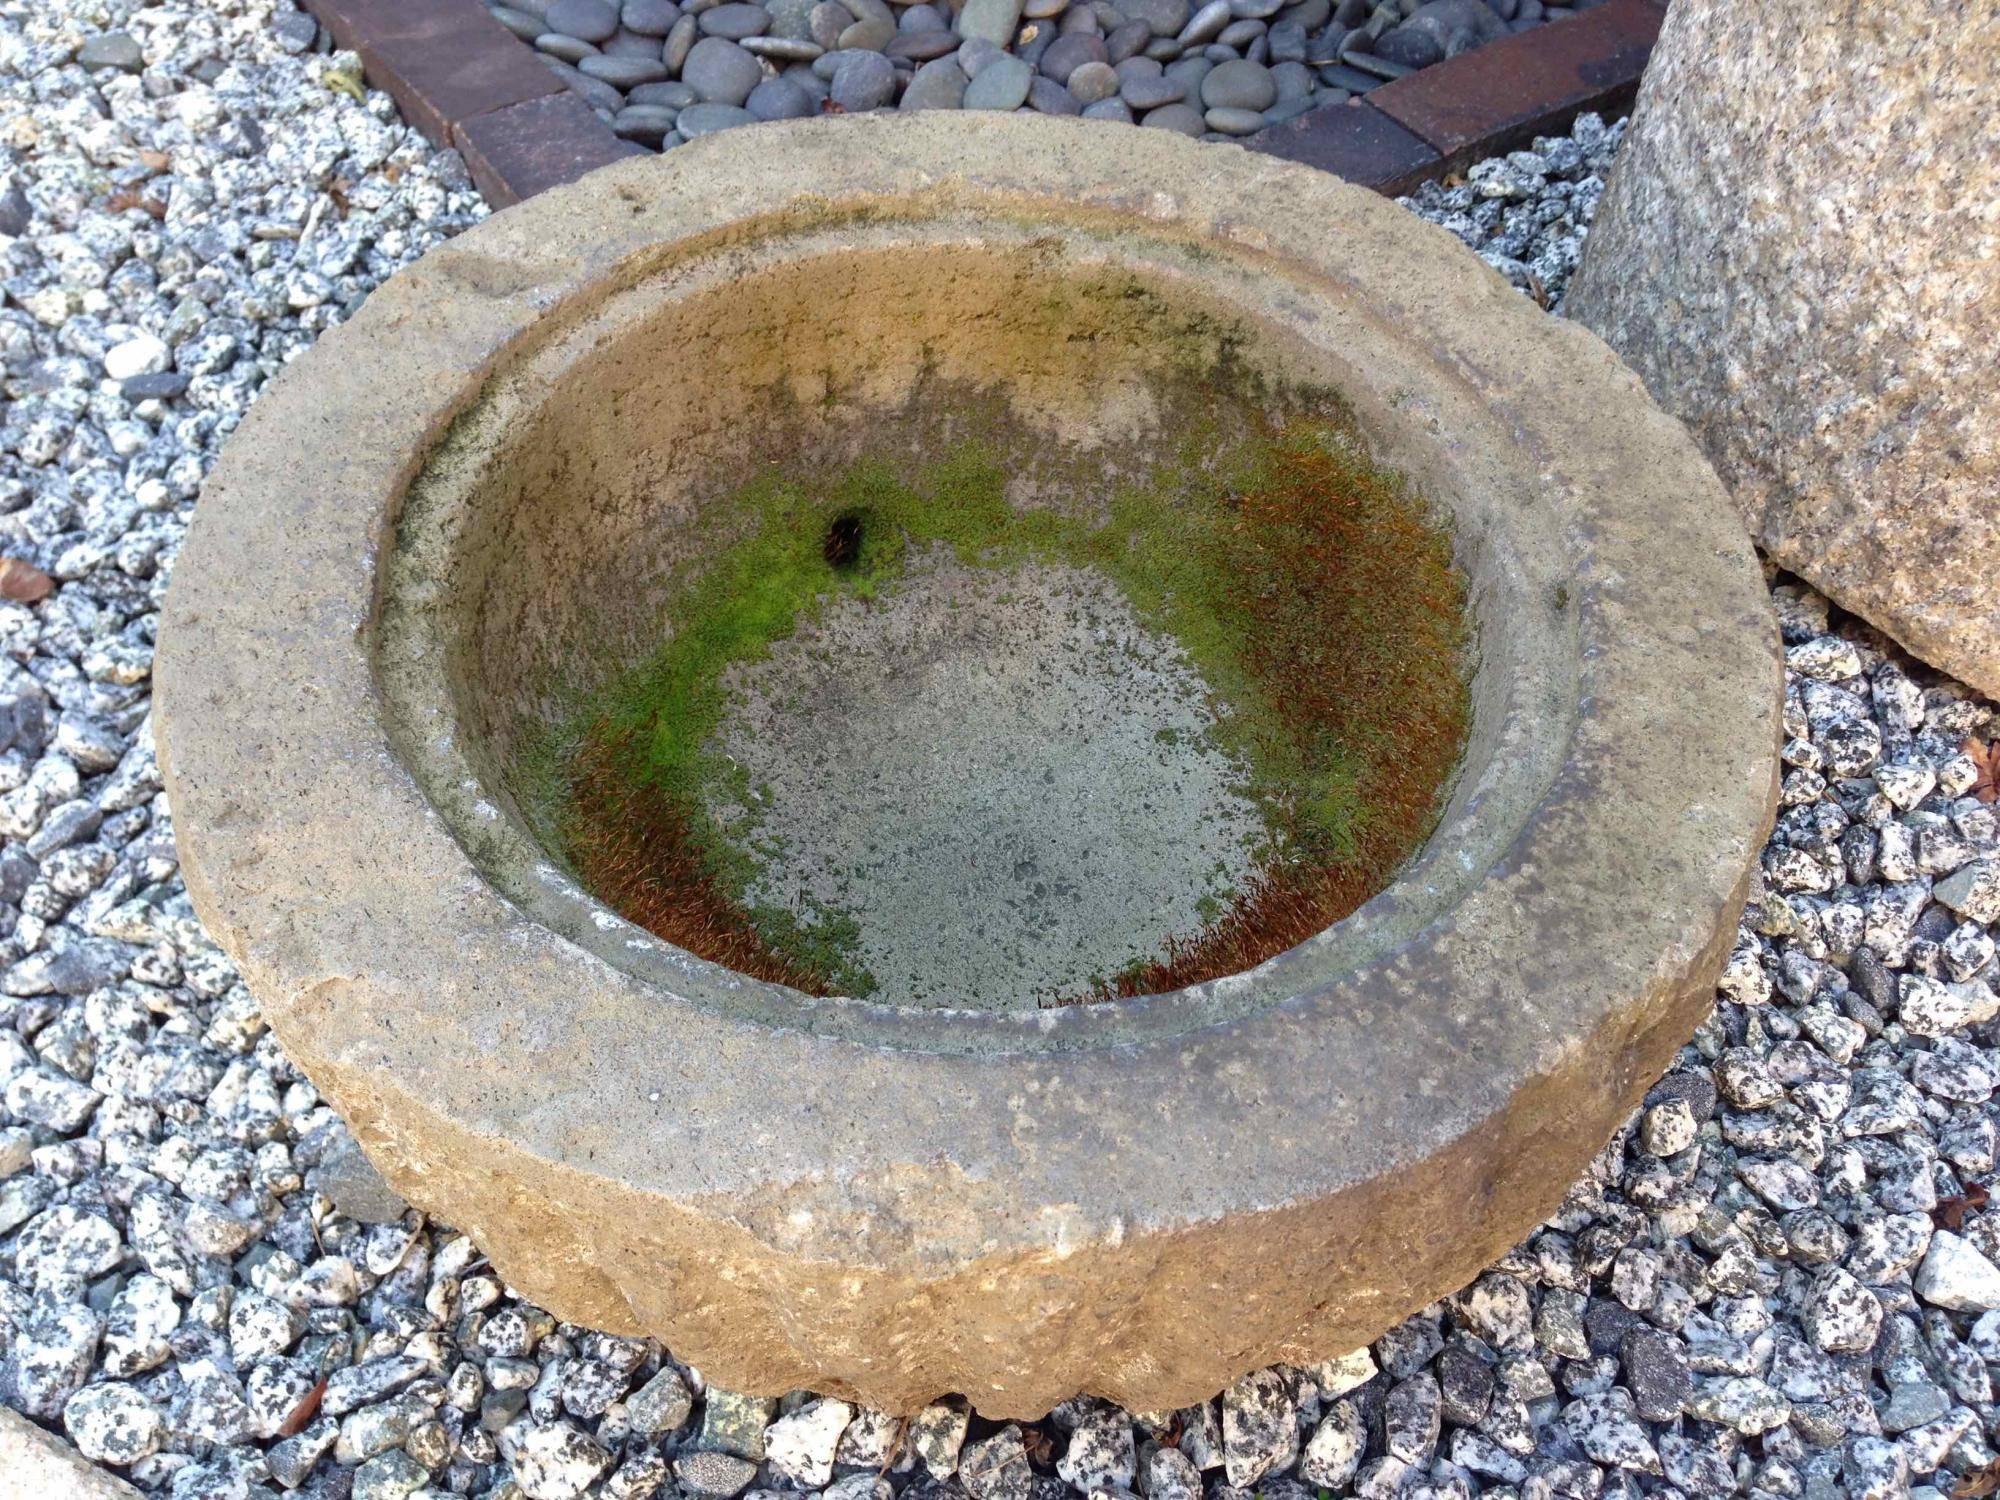 Stone water basin with heads as handles (Tsukubai)
Material: Granite
Origin: Japan
Age: Late Meiji period, circa 1890-1910
Size: 18-1/2